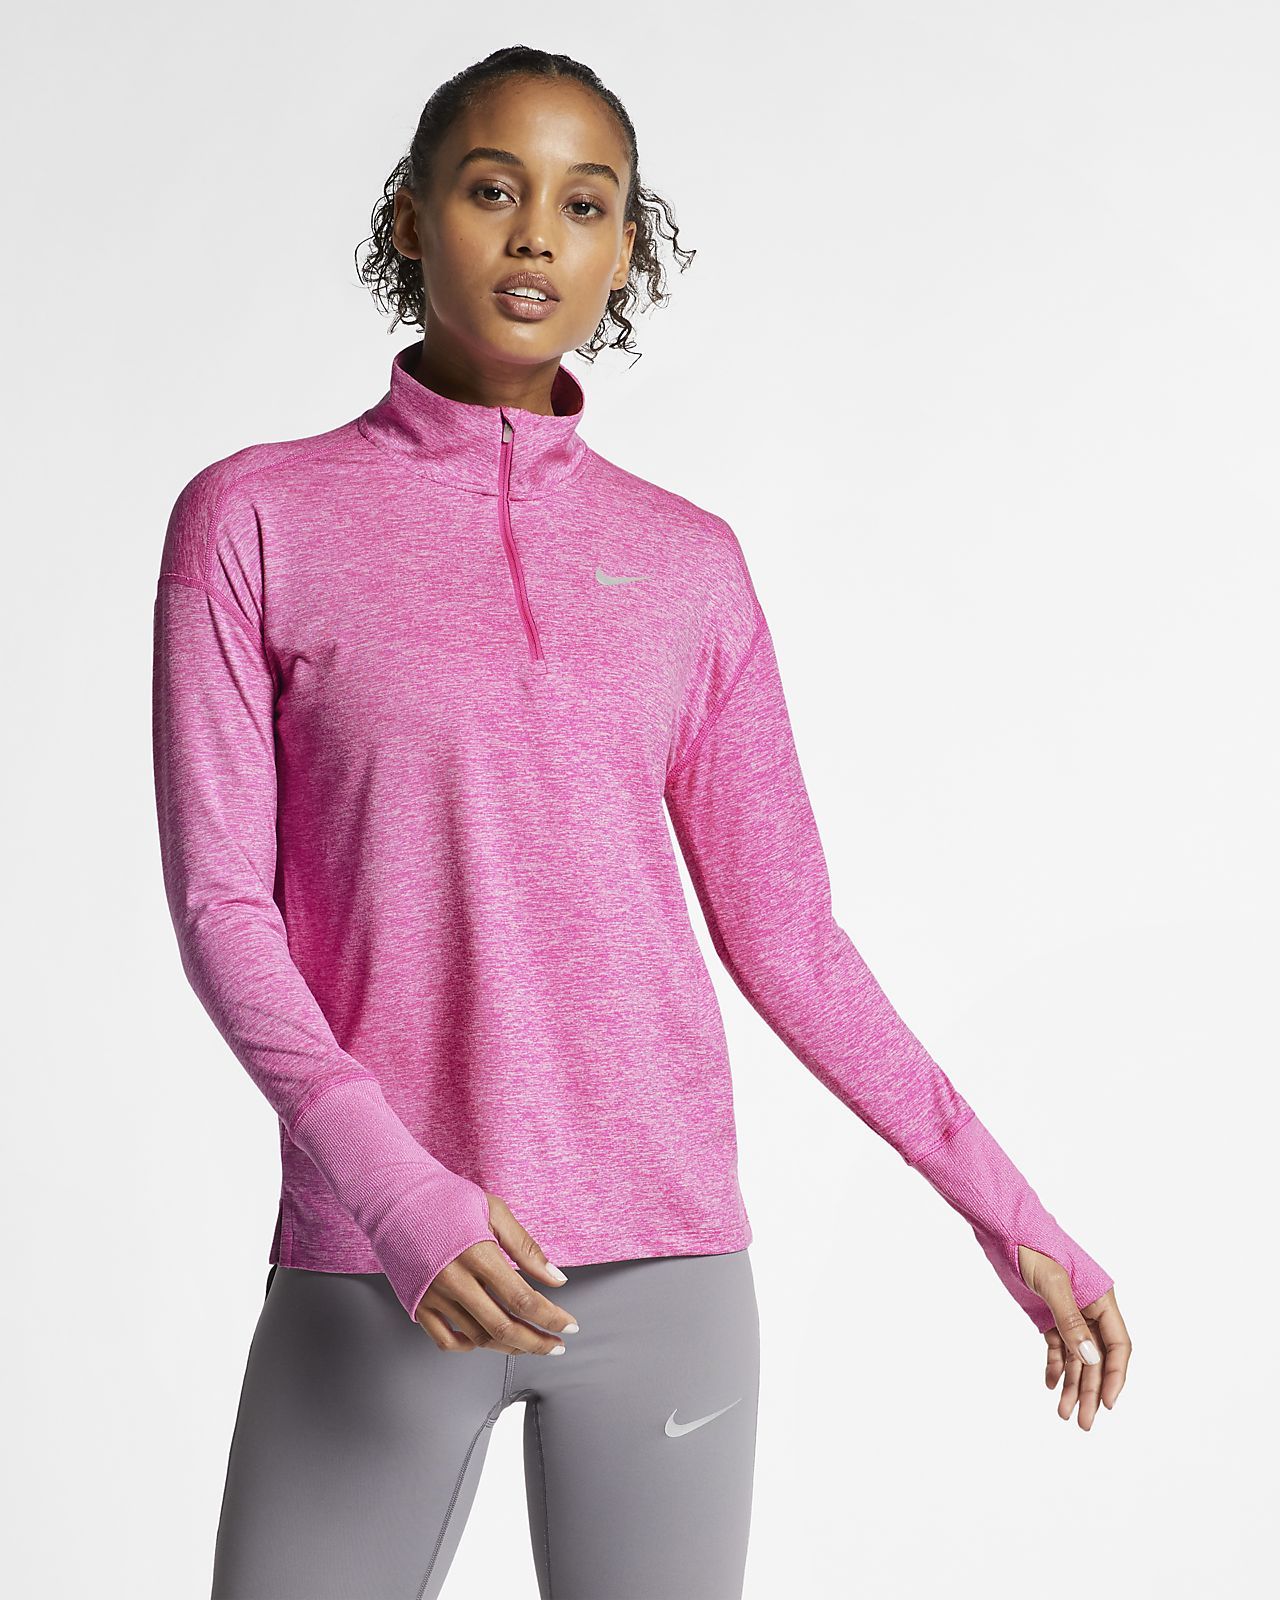 Nike Element Women's Half-Zip Running Top. Nike.com | Nike (US)